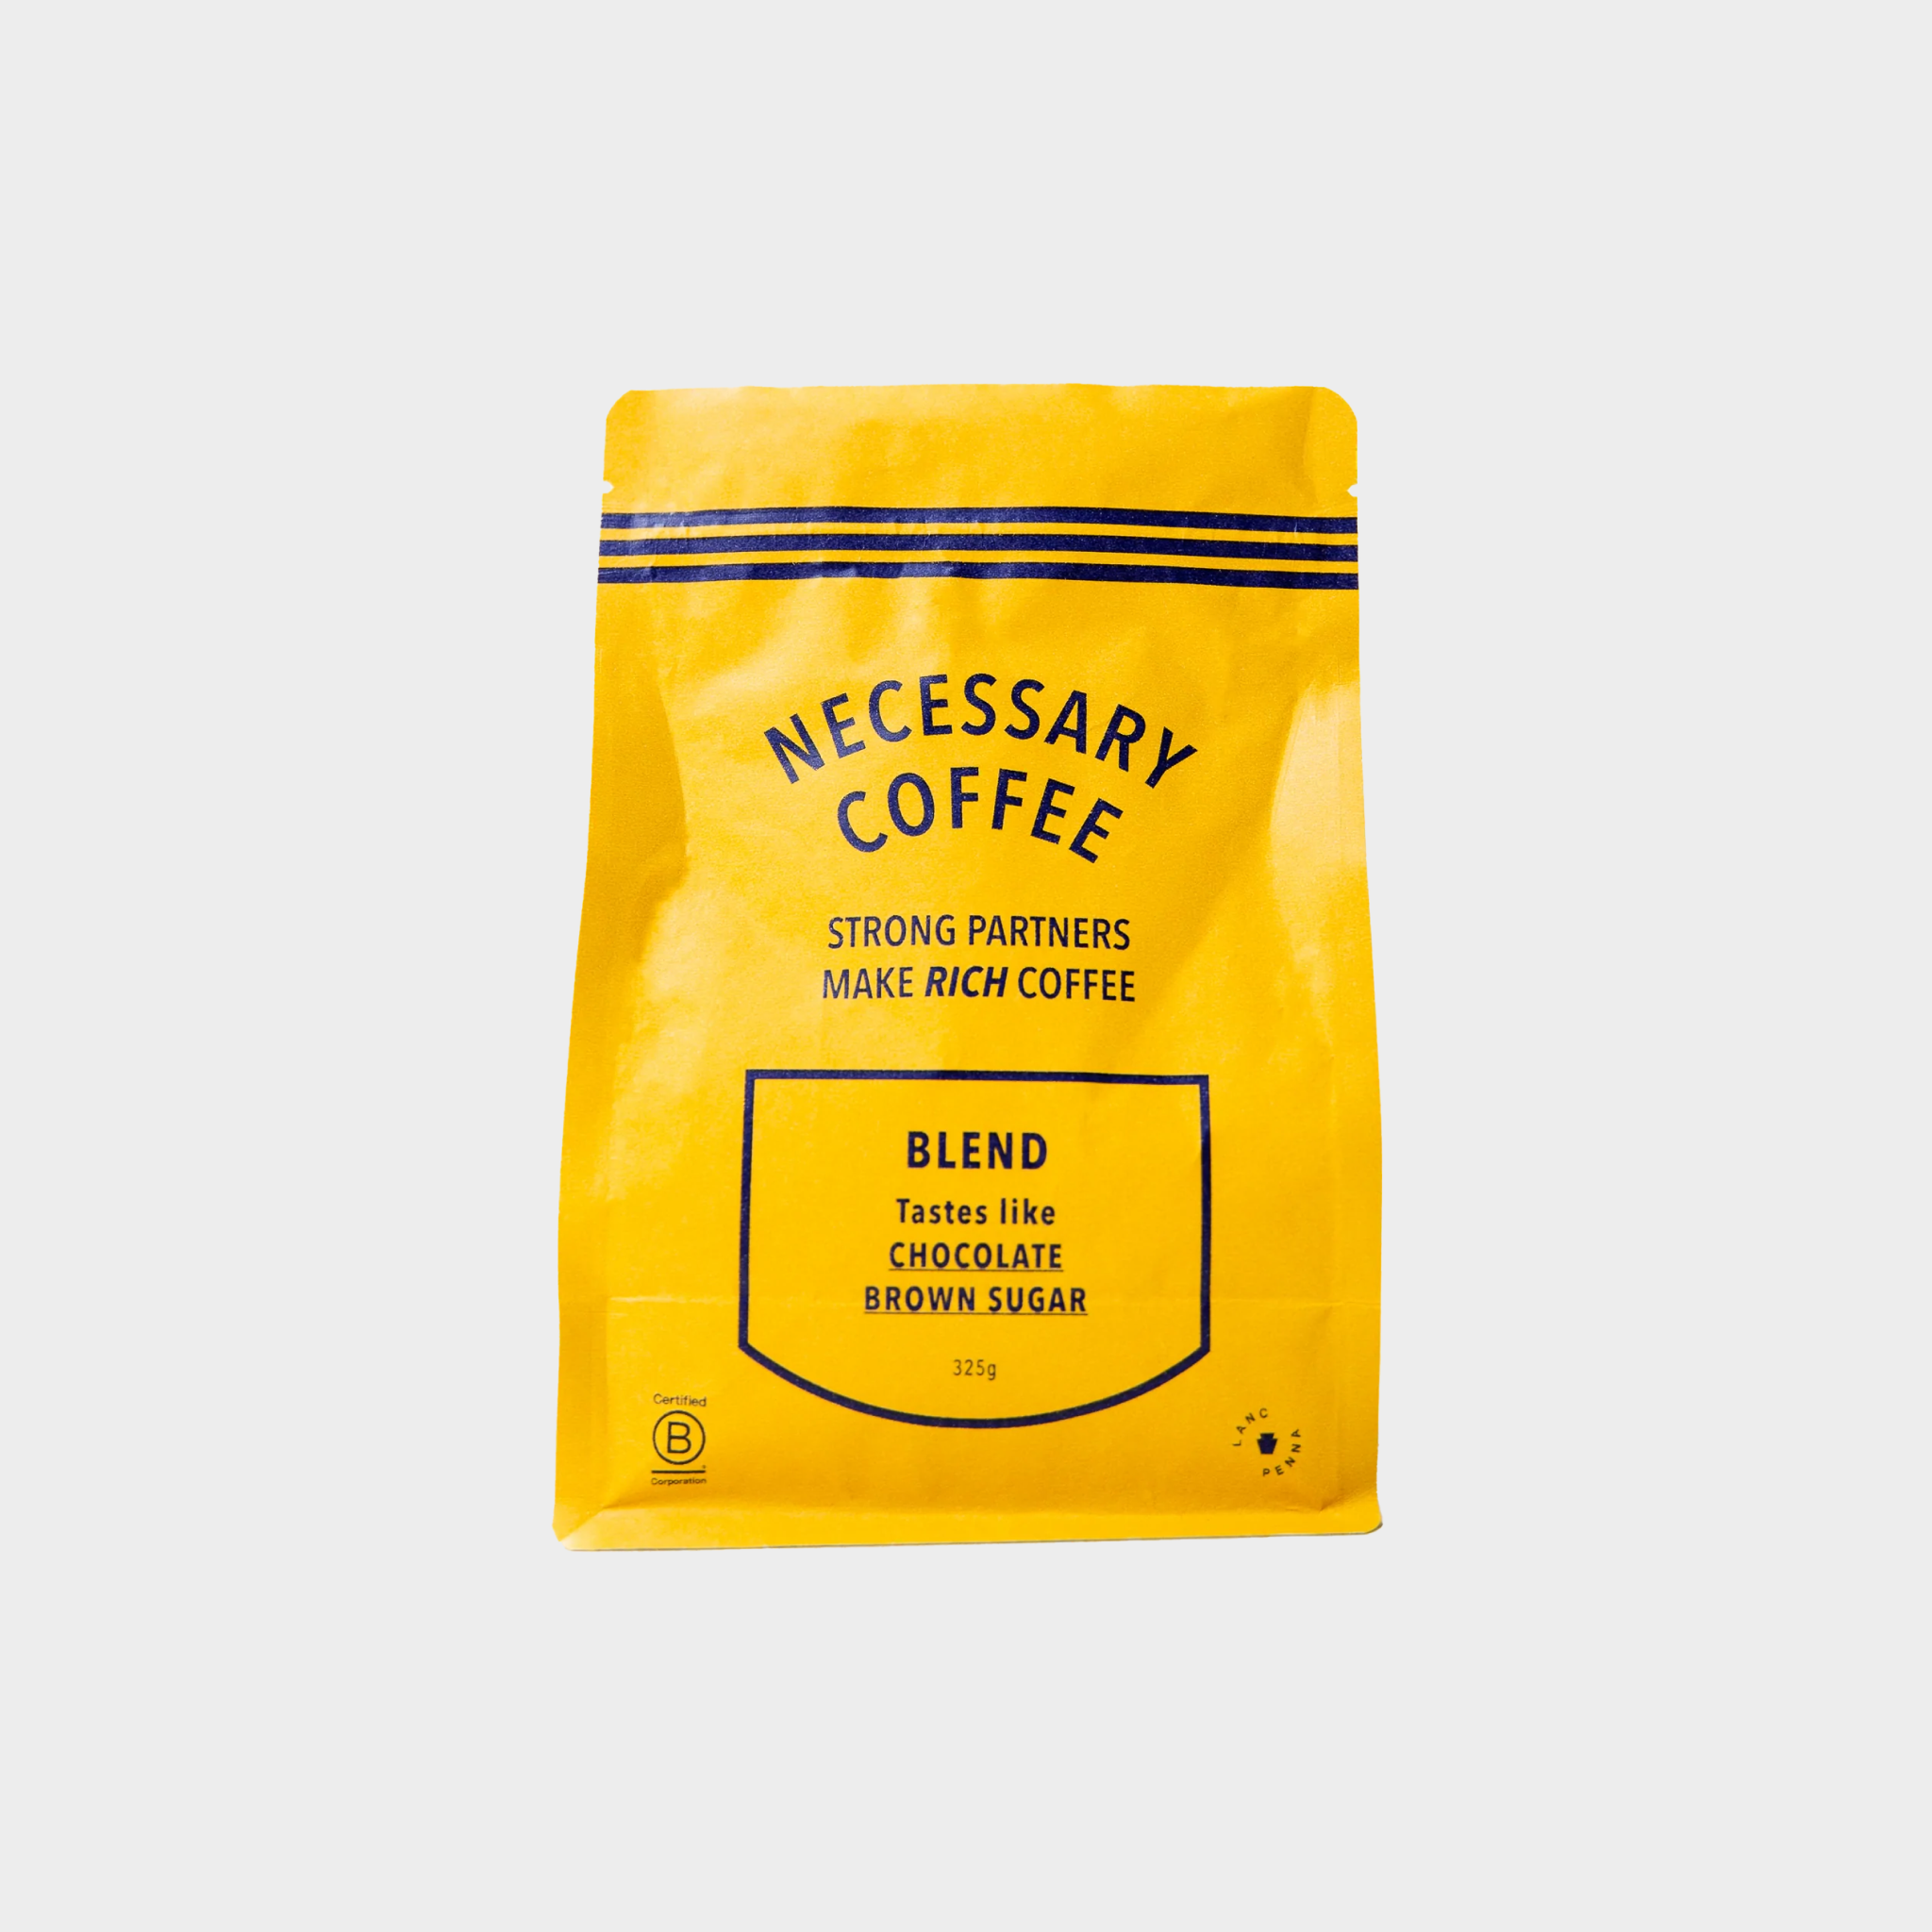 Terra Kaffe | Yellow bag of Necessary coffee